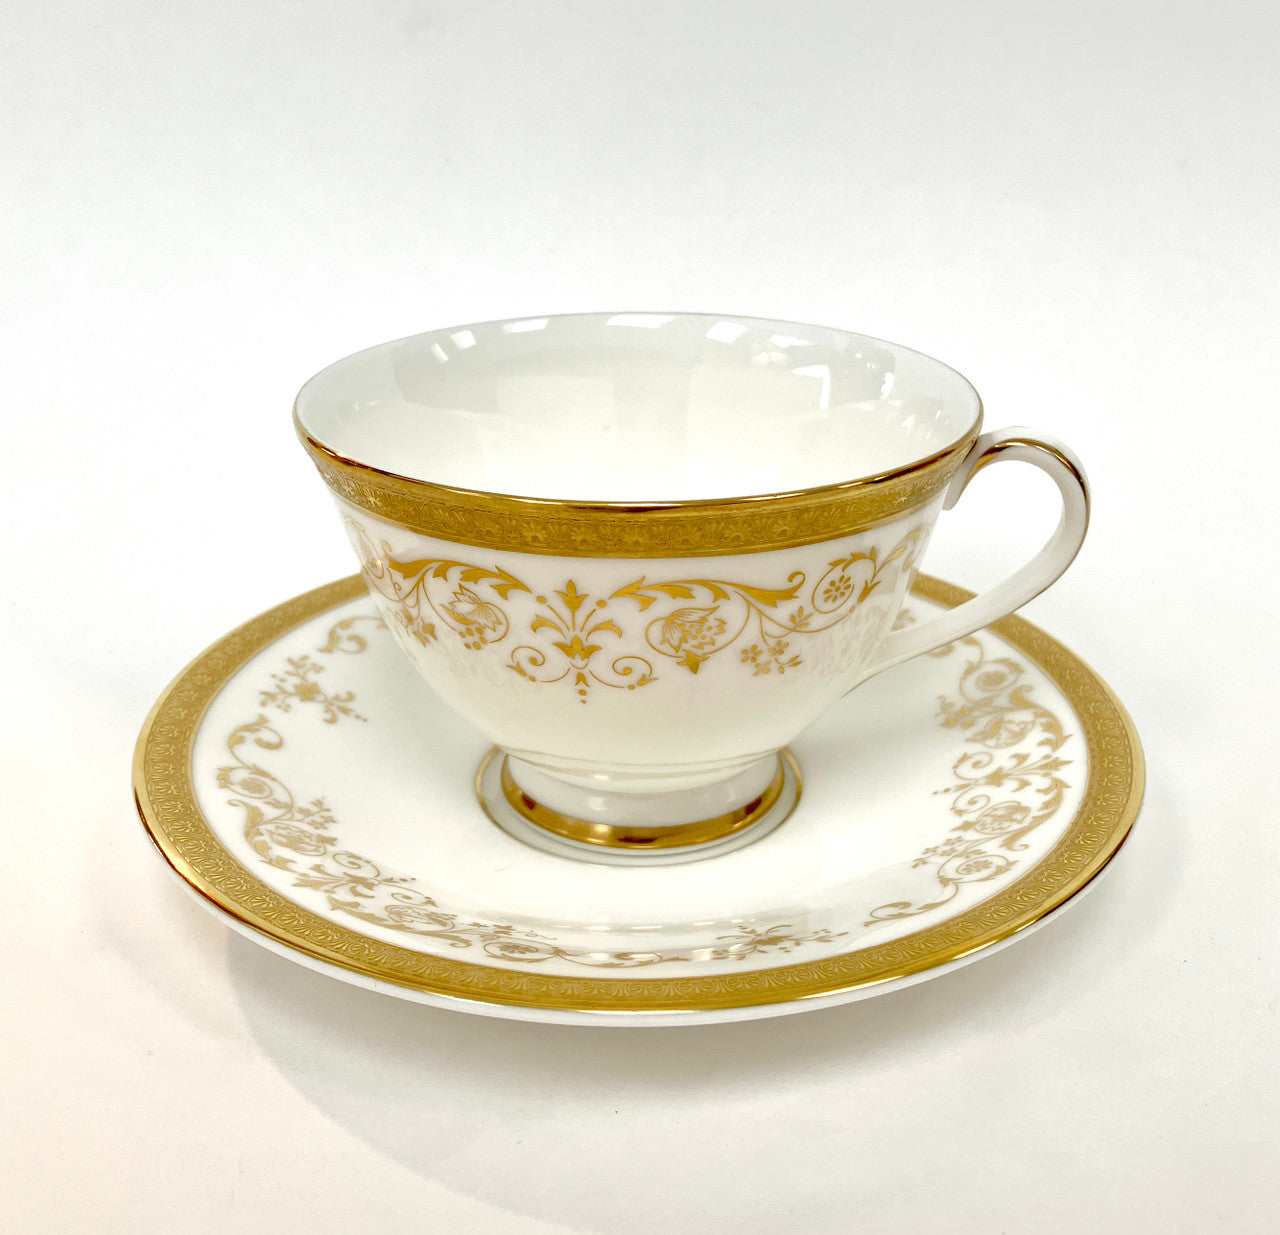 Royal Doulton, Belmont, H. 4991,  SET, Tea Cup, Teacup, Cup and Saucer, Fine Bone China, Vintage, England, White, Gold